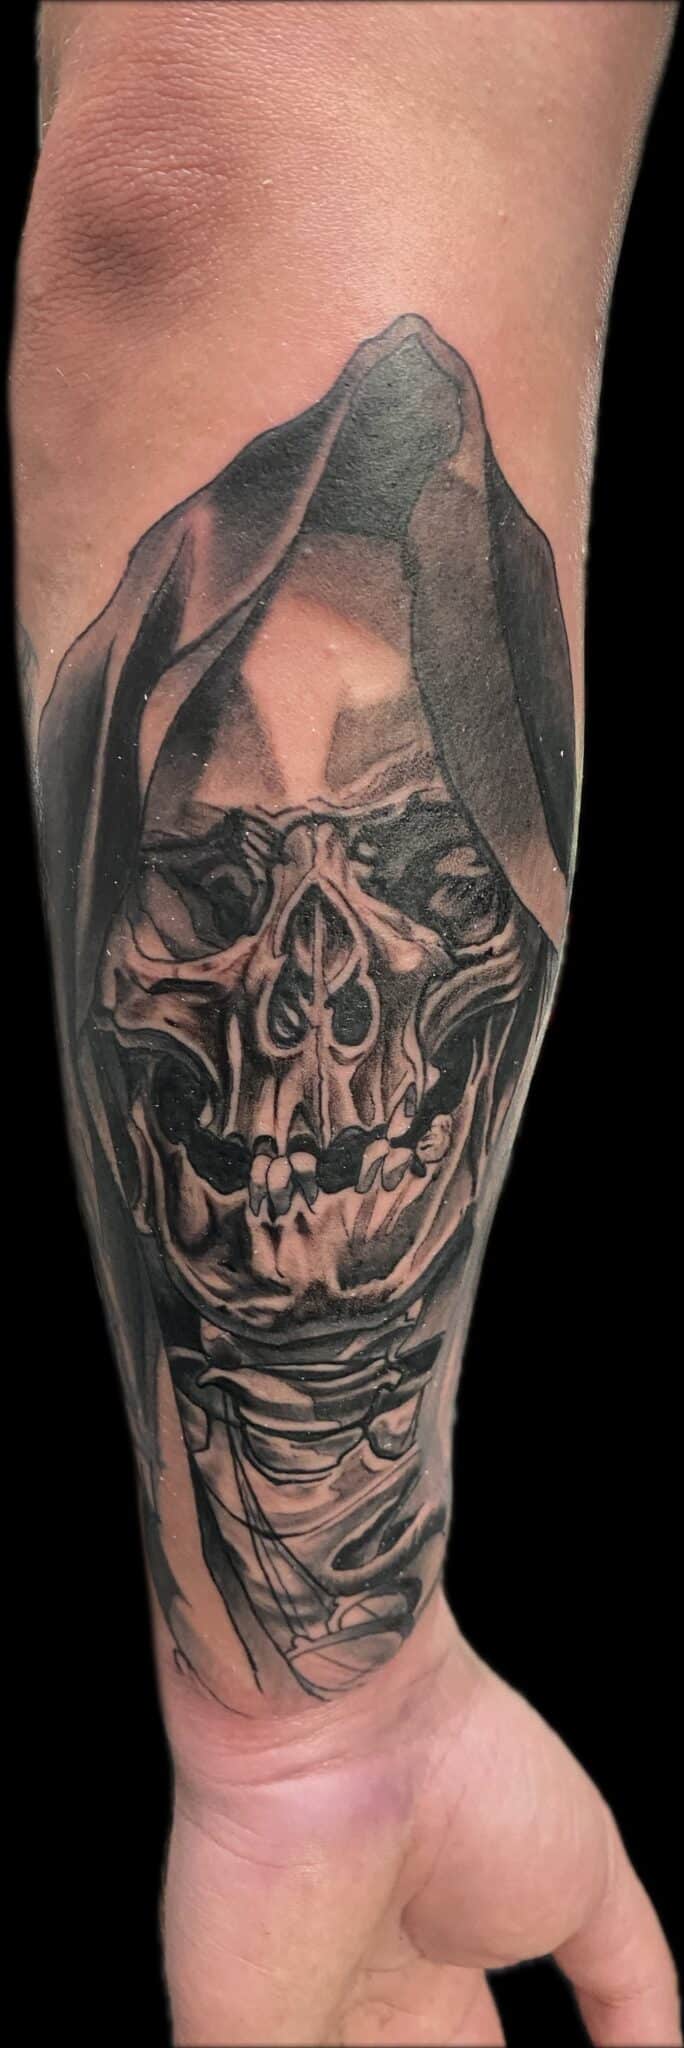 reaper tattoo on forearm, Tattoo by Chris Beck, artist at Revolt Tattoos